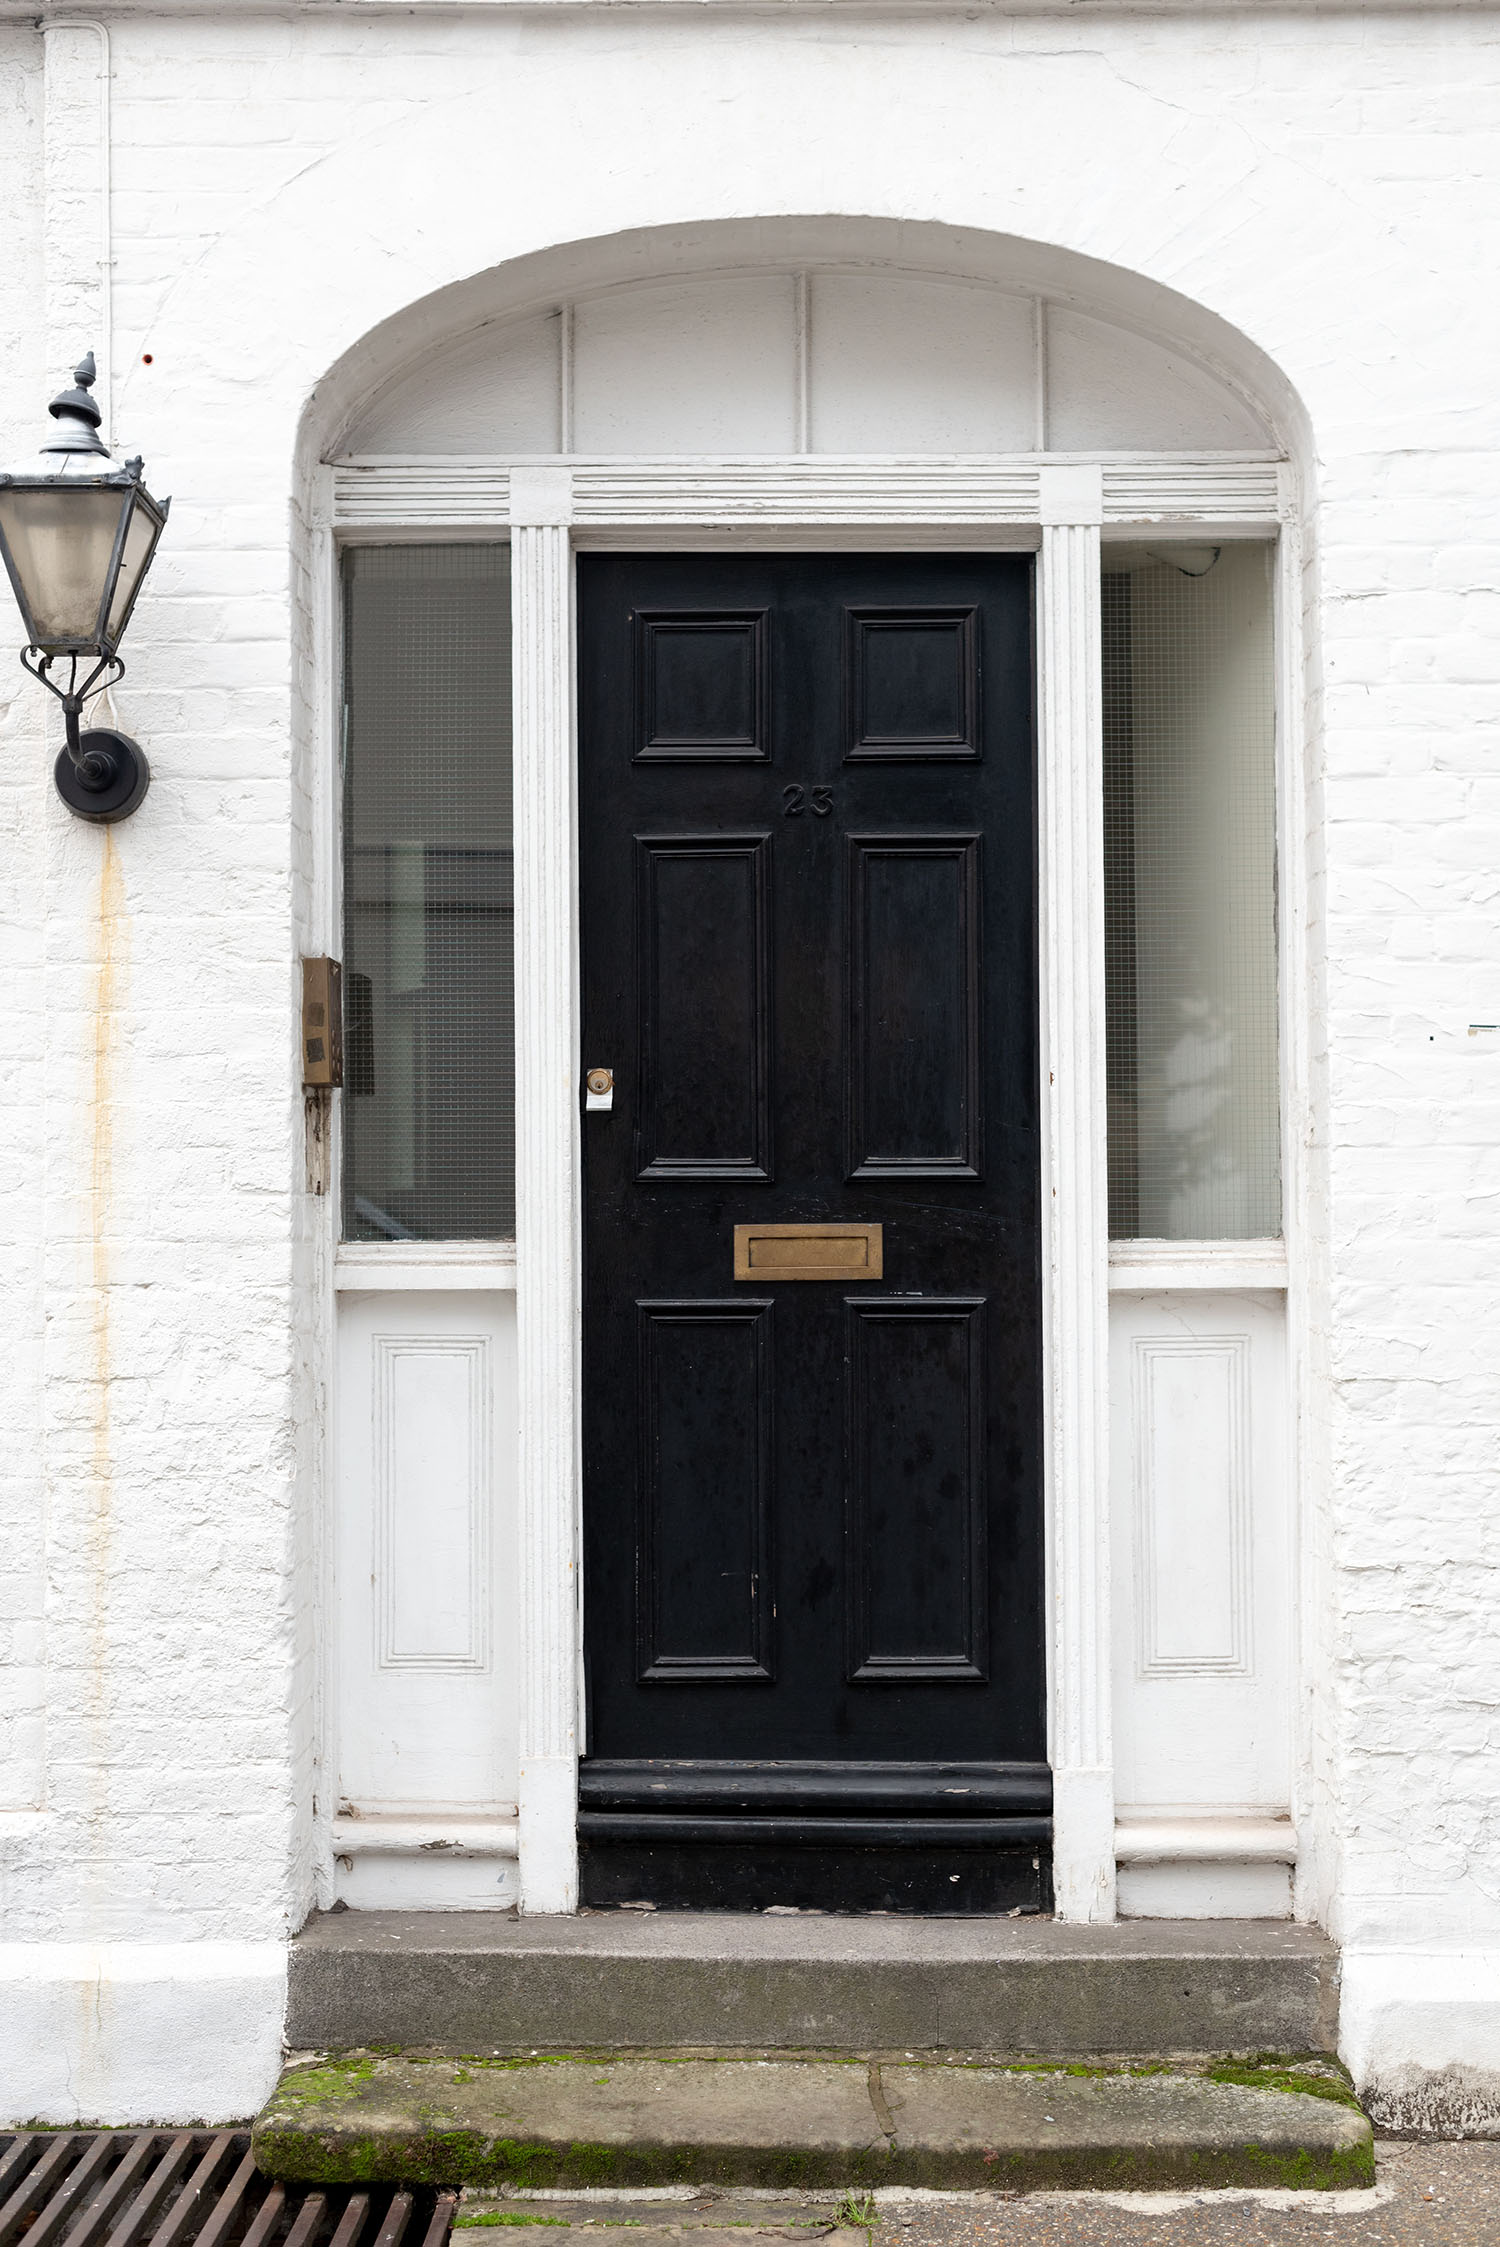 Coco & Vera - Black door on a white building in London, England